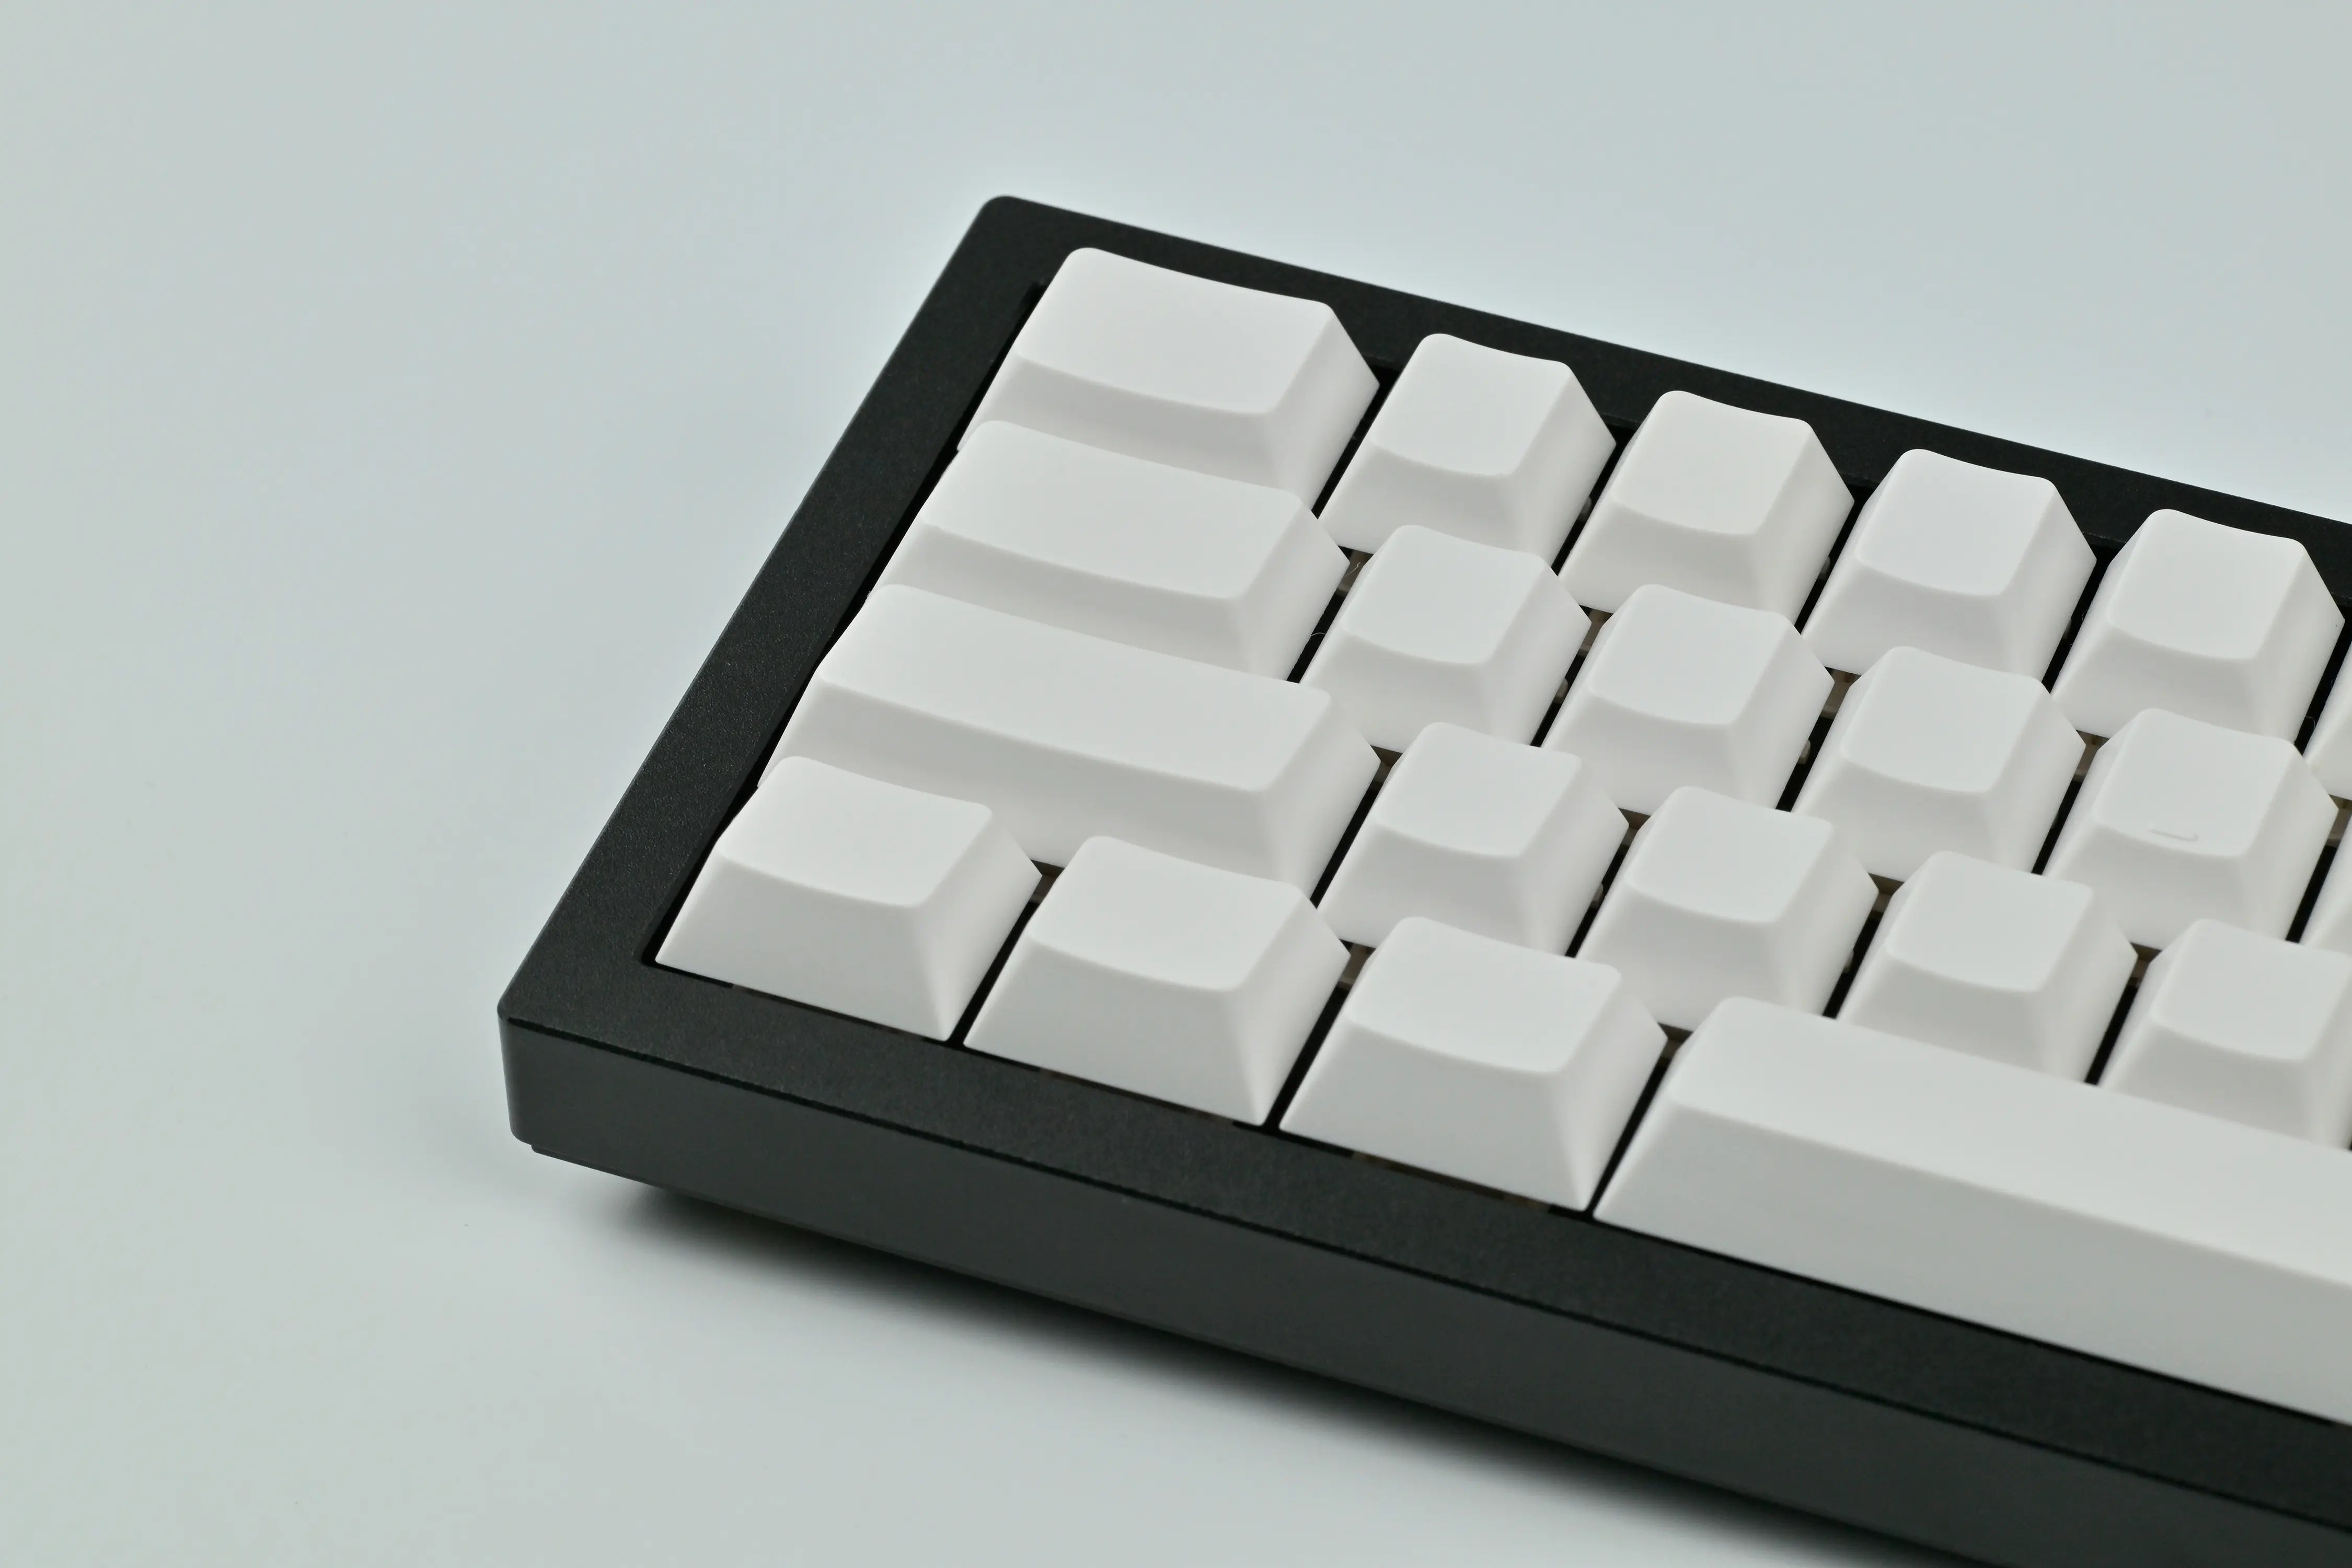 Keyreative ABS Cherry Profile White Blank Keycaps